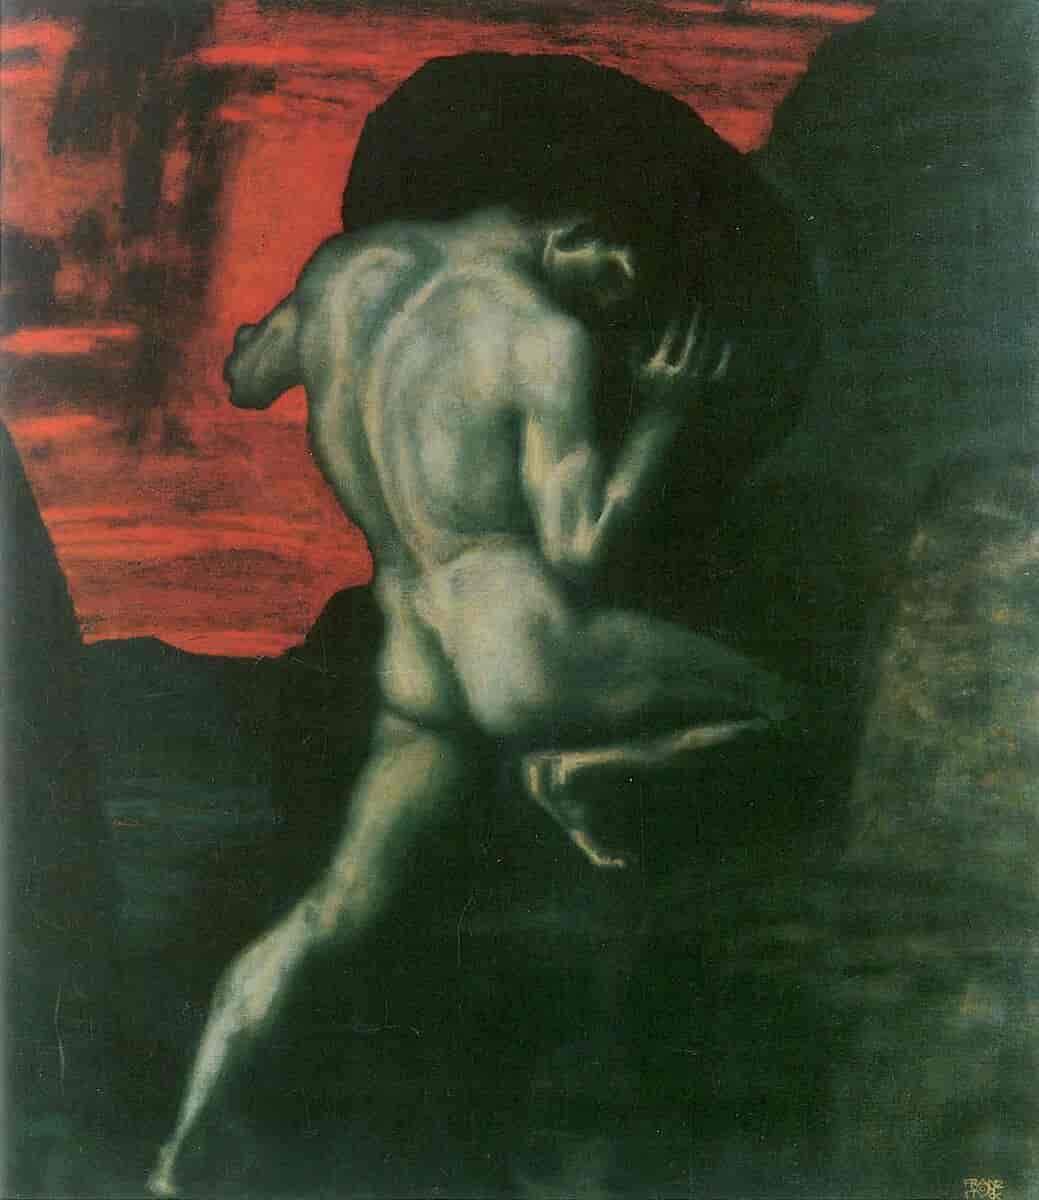 "Sisyphus", 1920